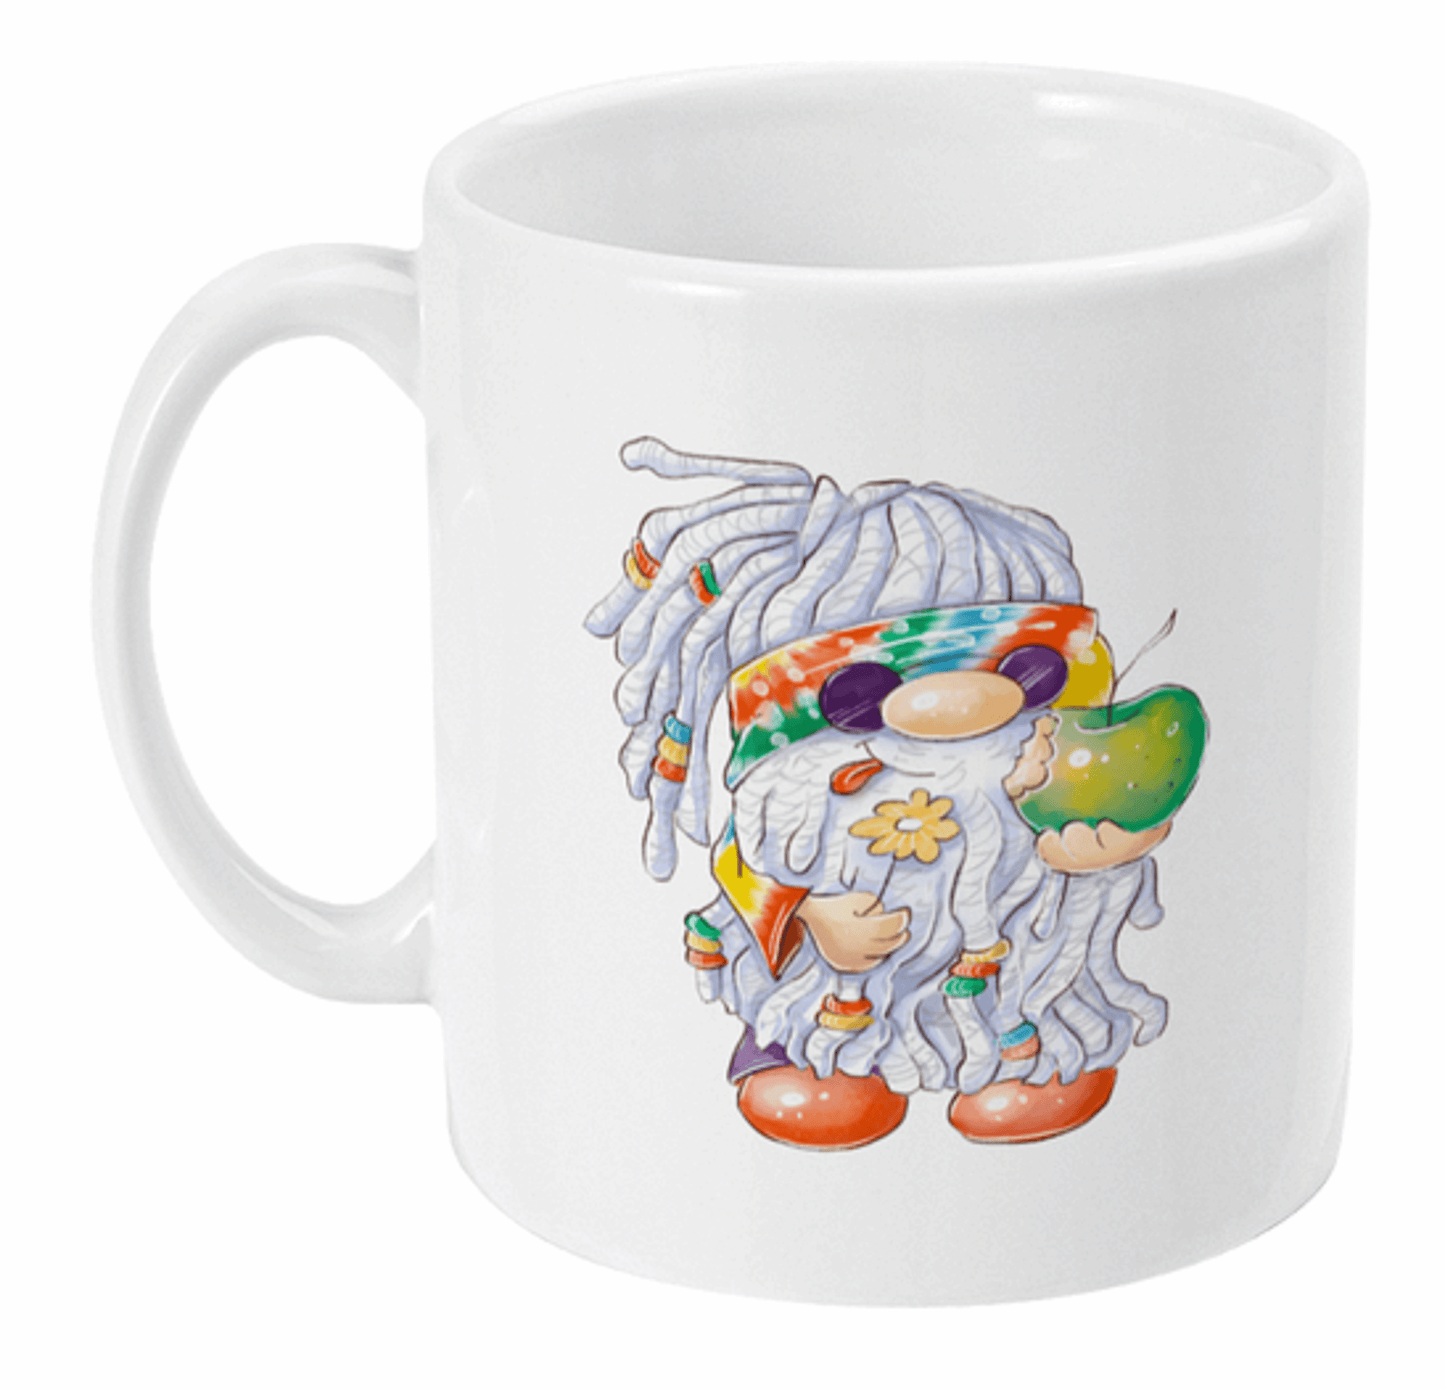  Dreadlocked Hippy Gnome Coffee Mug by Free Spirit Accessories sold by Free Spirit Accessories